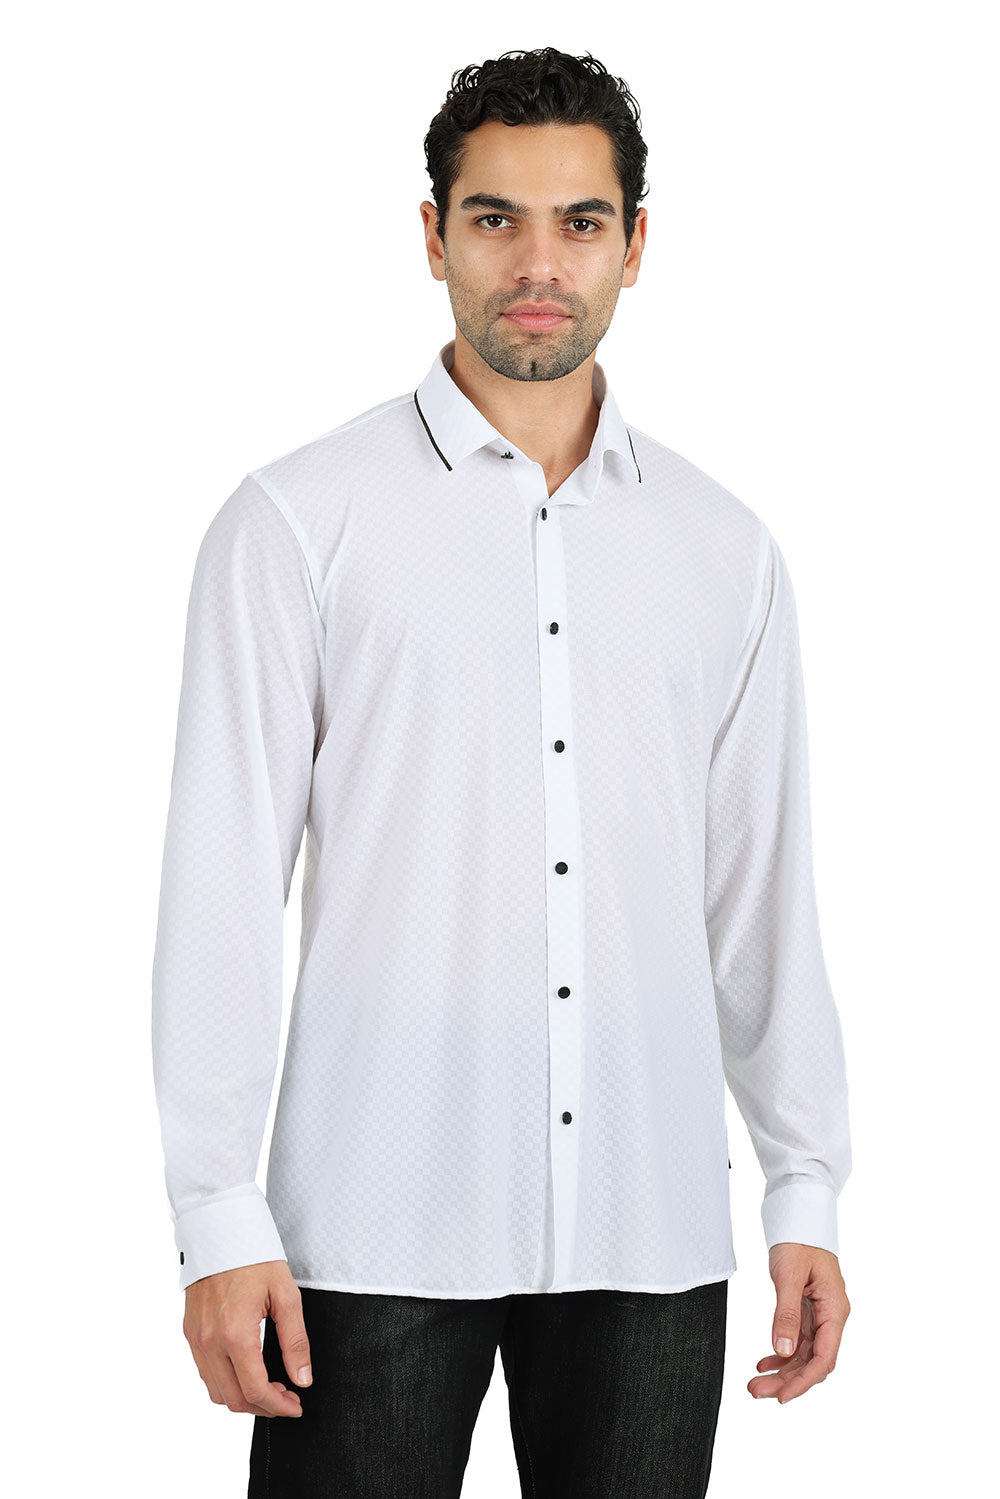 Barabas Men's Premium Solid No Stitches Long Sleeves Shirts 2B403 White